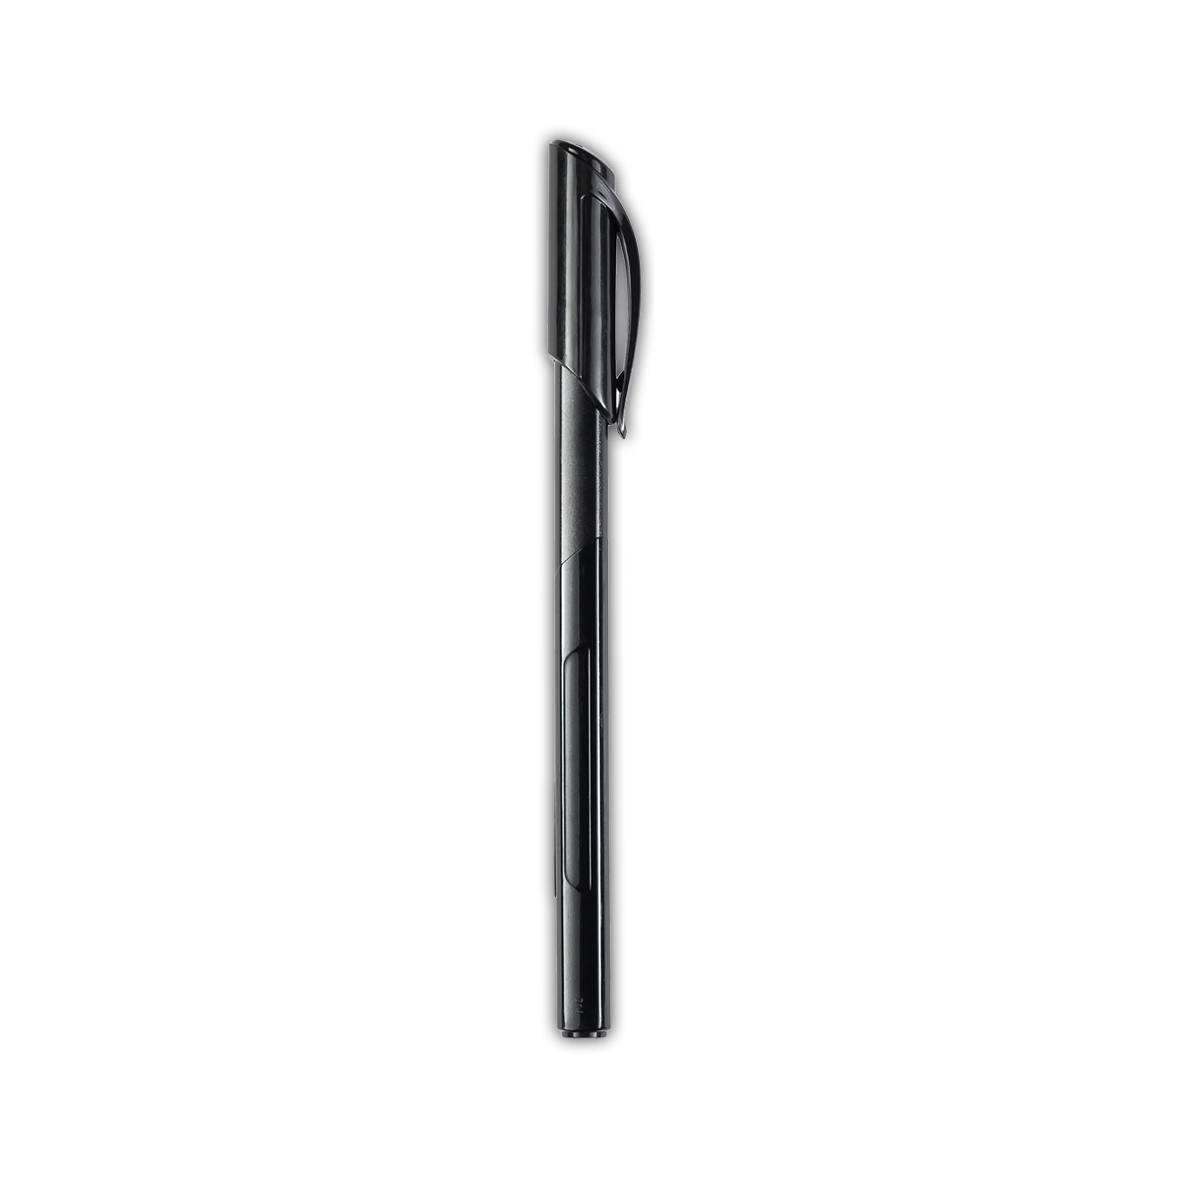 tt-długopis flexi trio jet czarny 1.0mm penmate tt7531 /50/